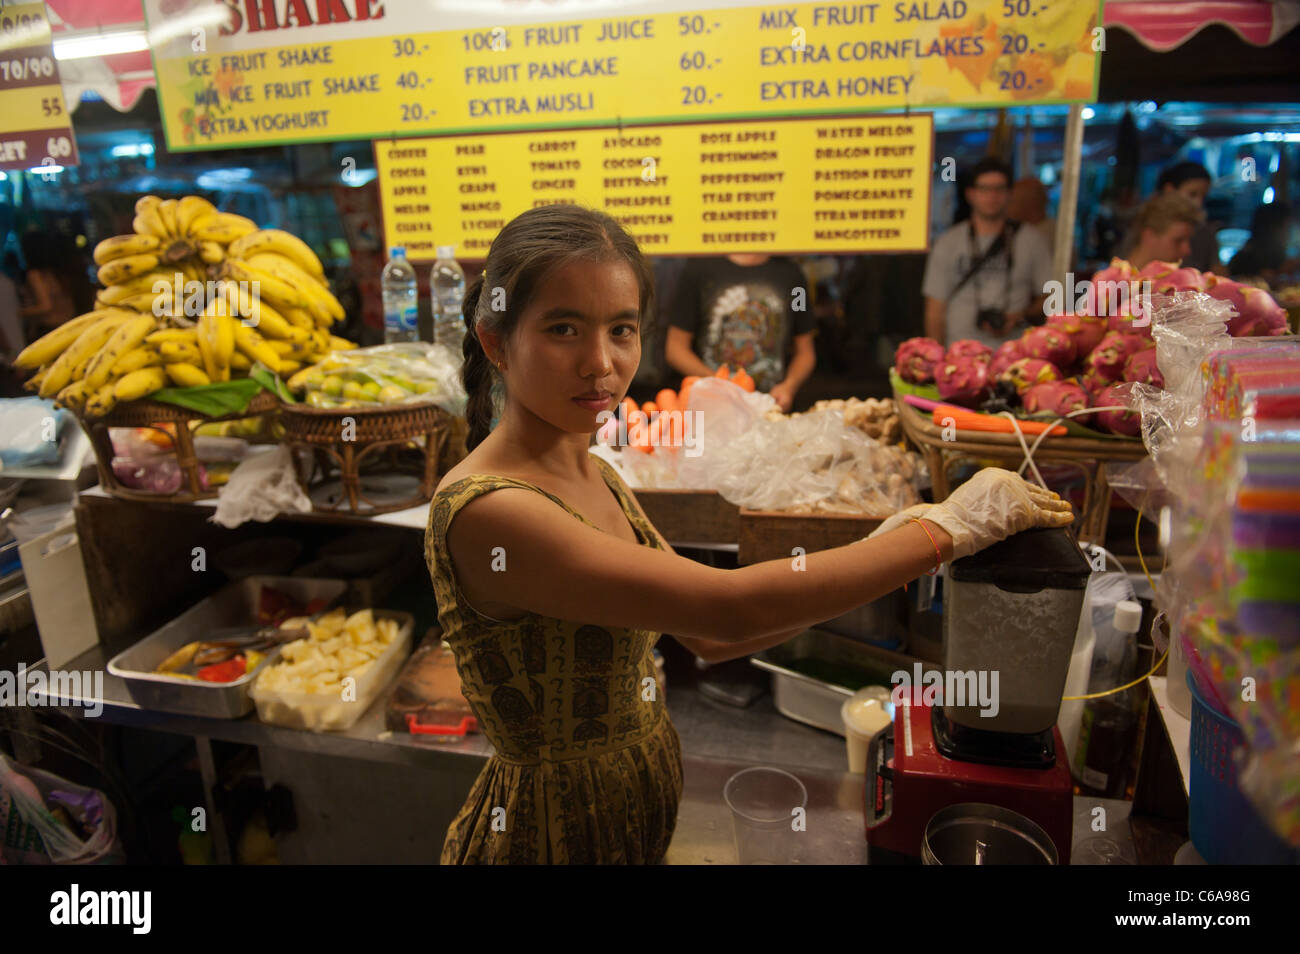 Une femme street trader offre un fruit shake, Khaosan Road, Bangkok, Thaïlande Banque D'Images